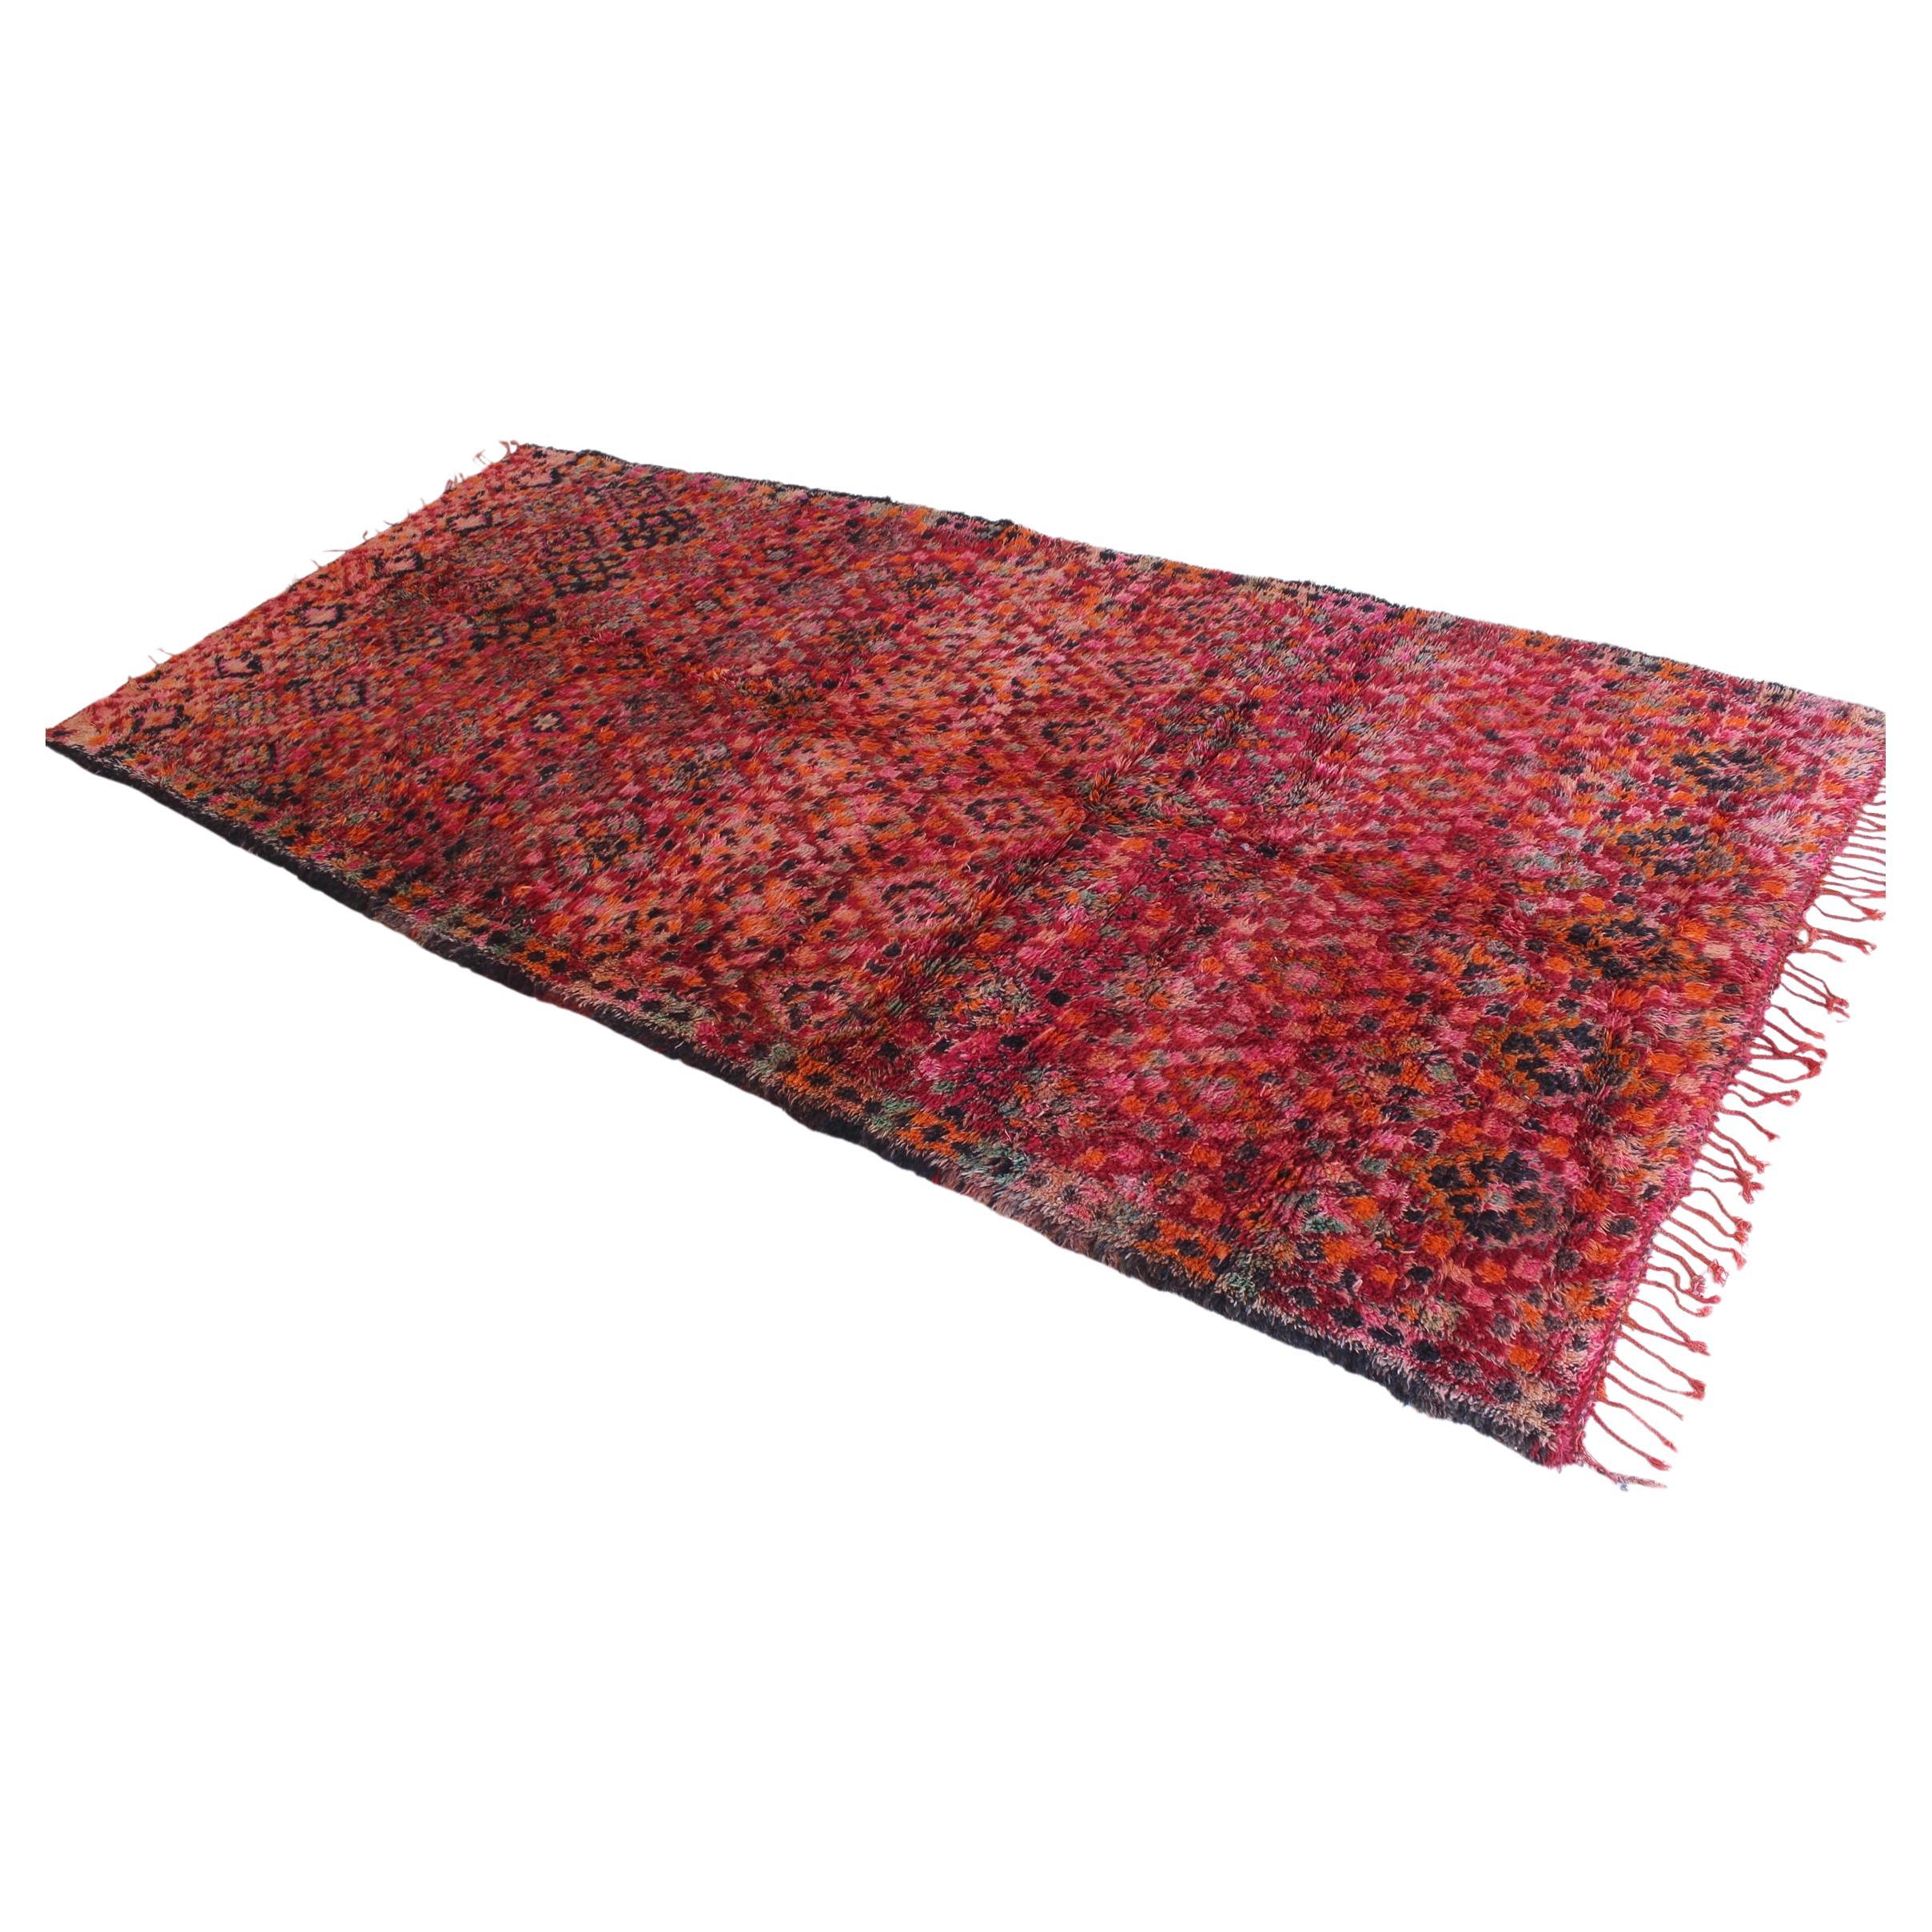 Vintage Moroccan Beni Mguild rug - Red - 6.5x14.3feet / 200x437cm